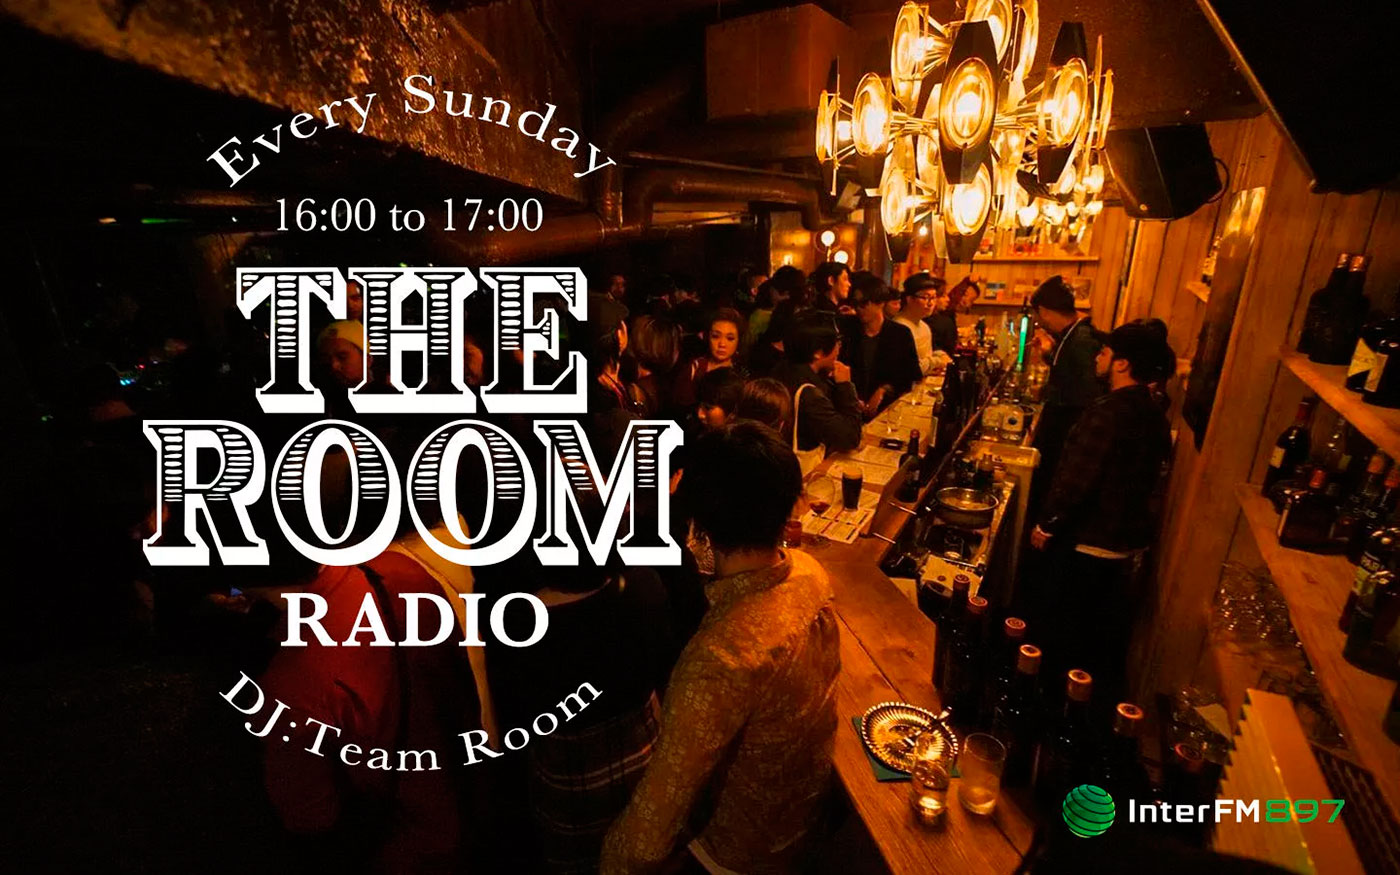 The Room Radio